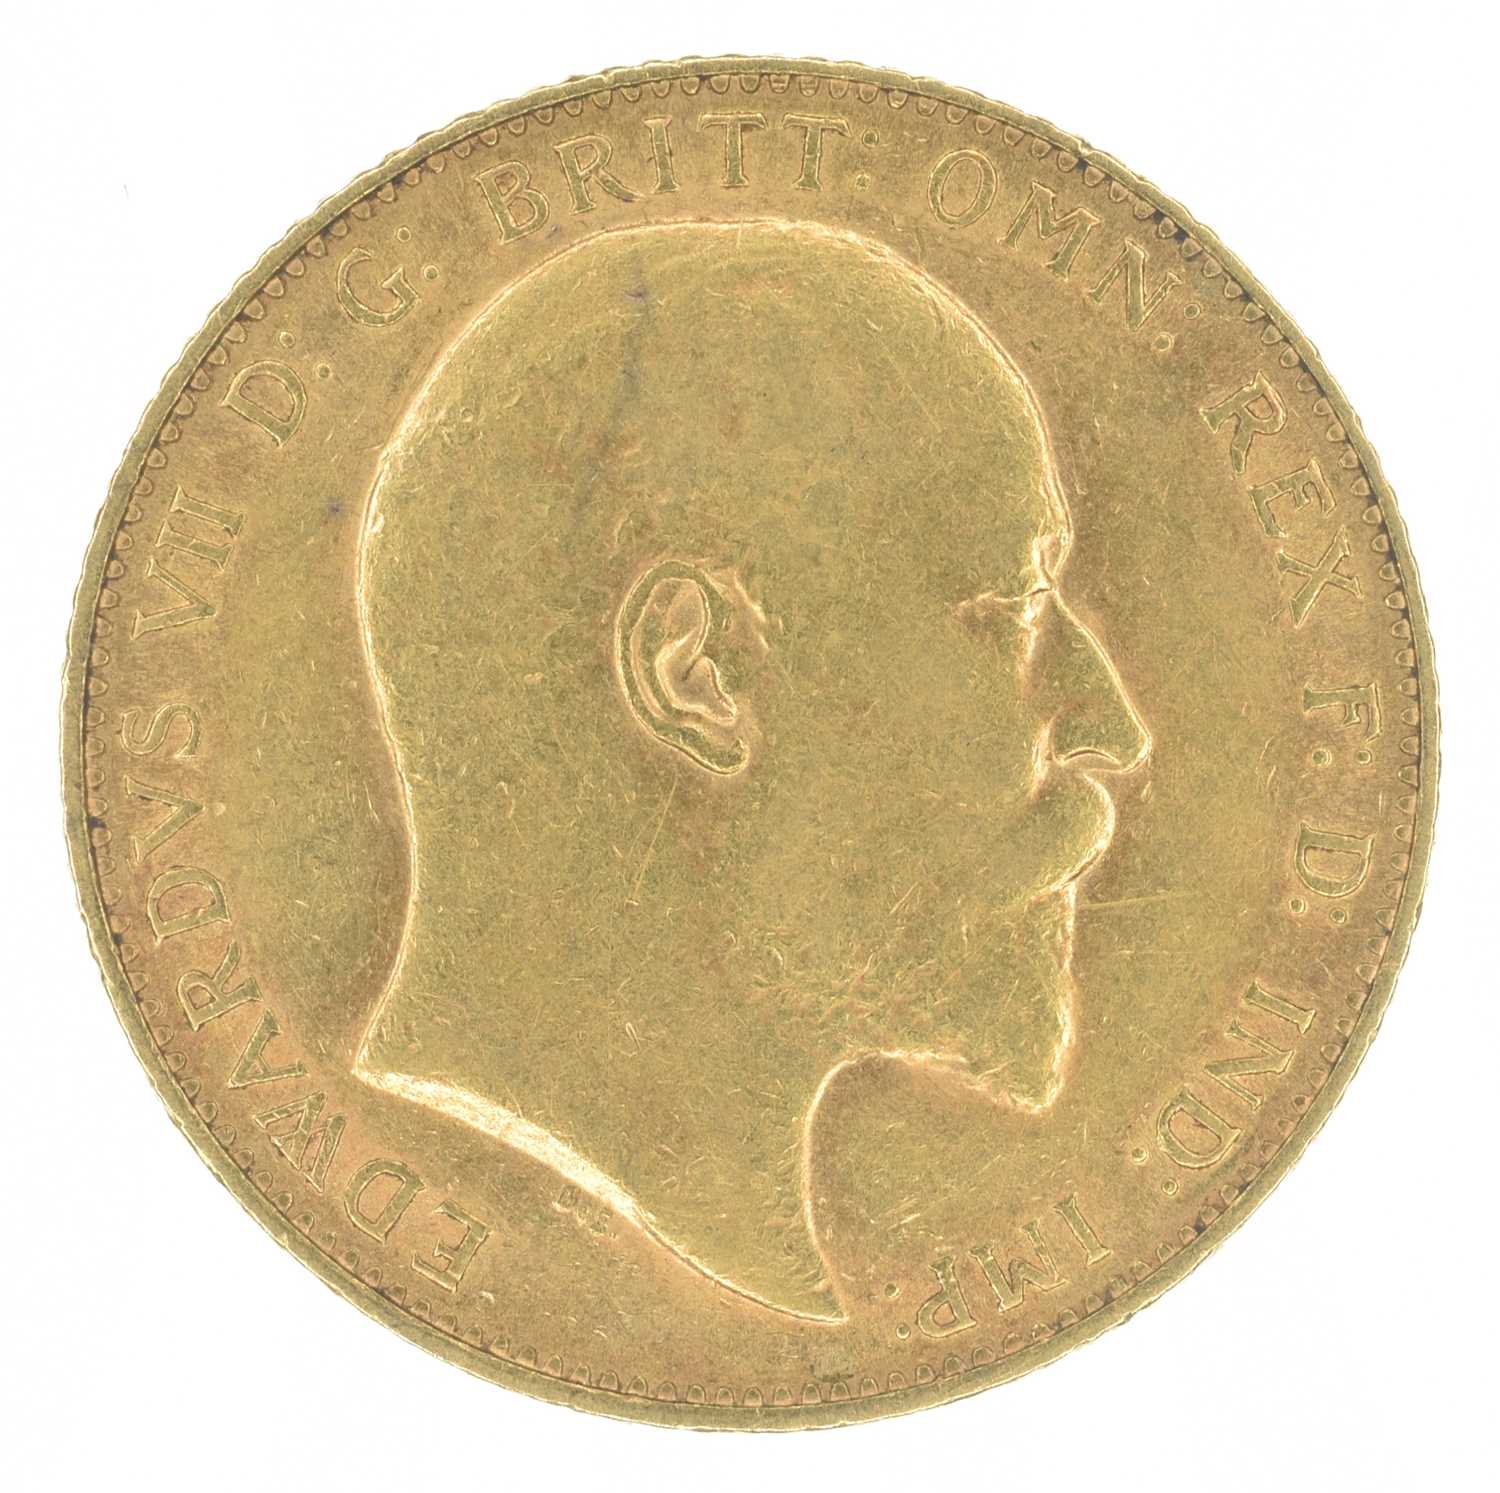 Lot 42 - King Edward VII, Sovereign, 1907, London Mint.